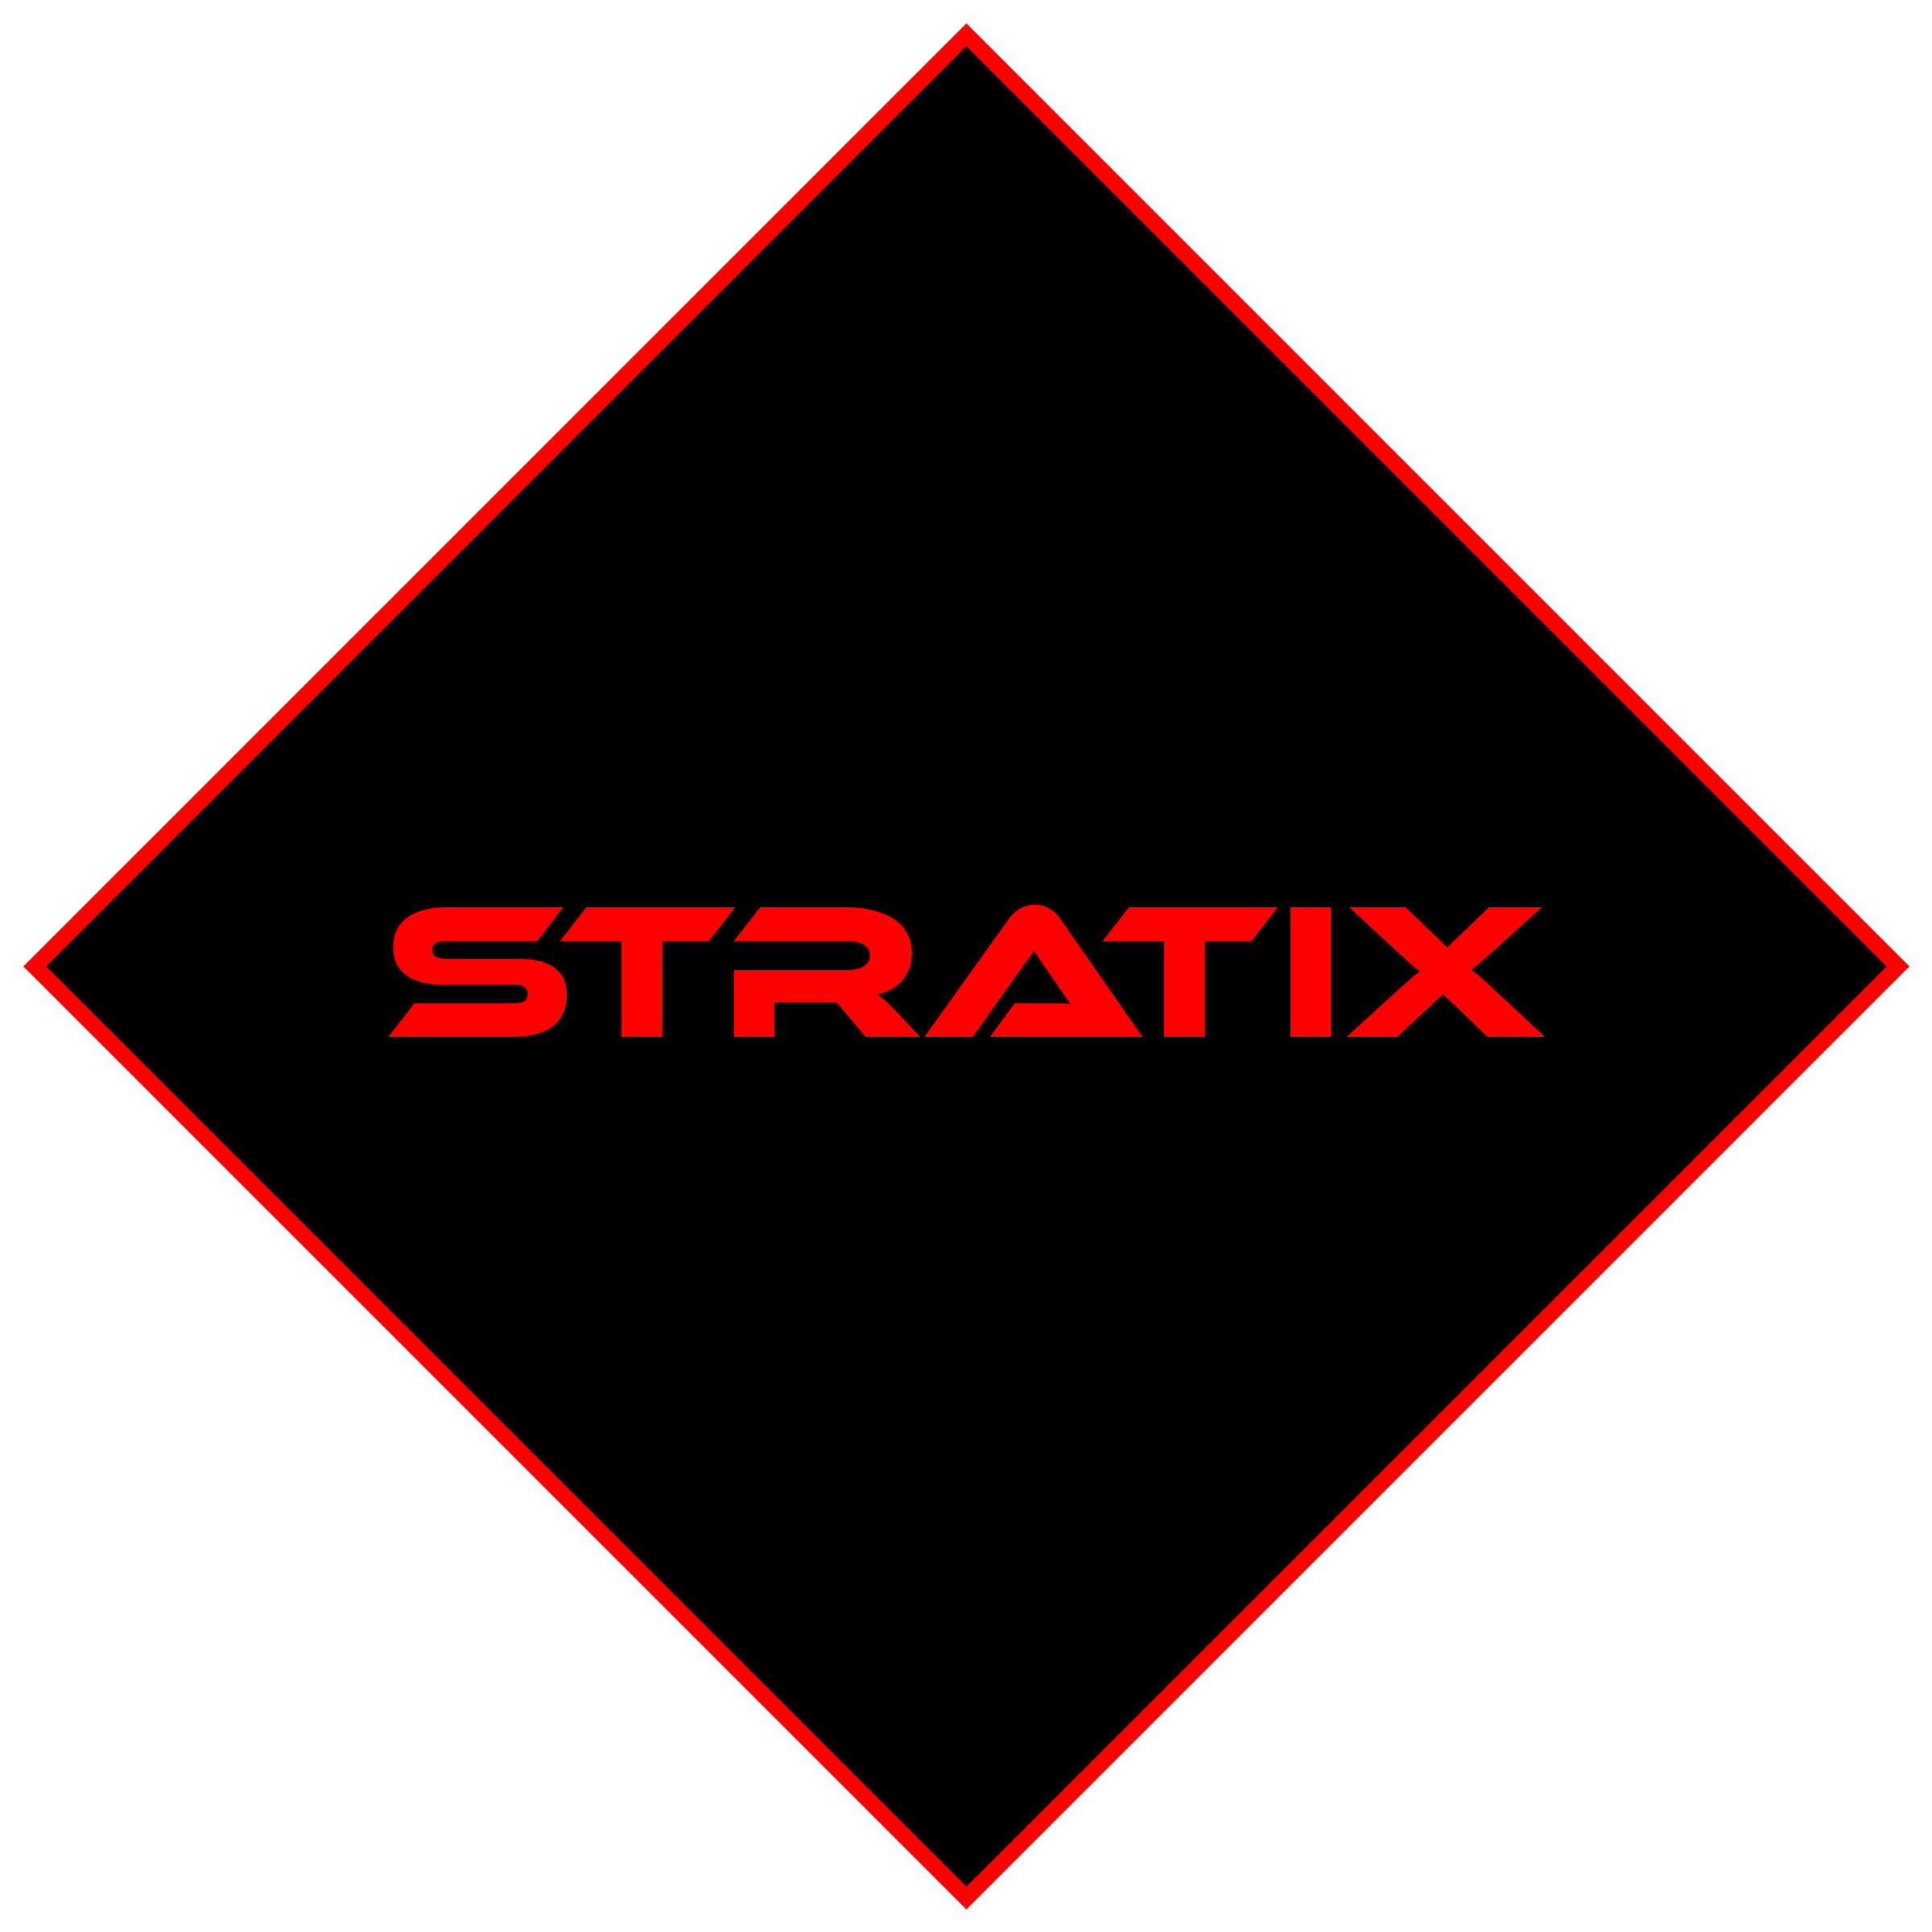 STRATIX